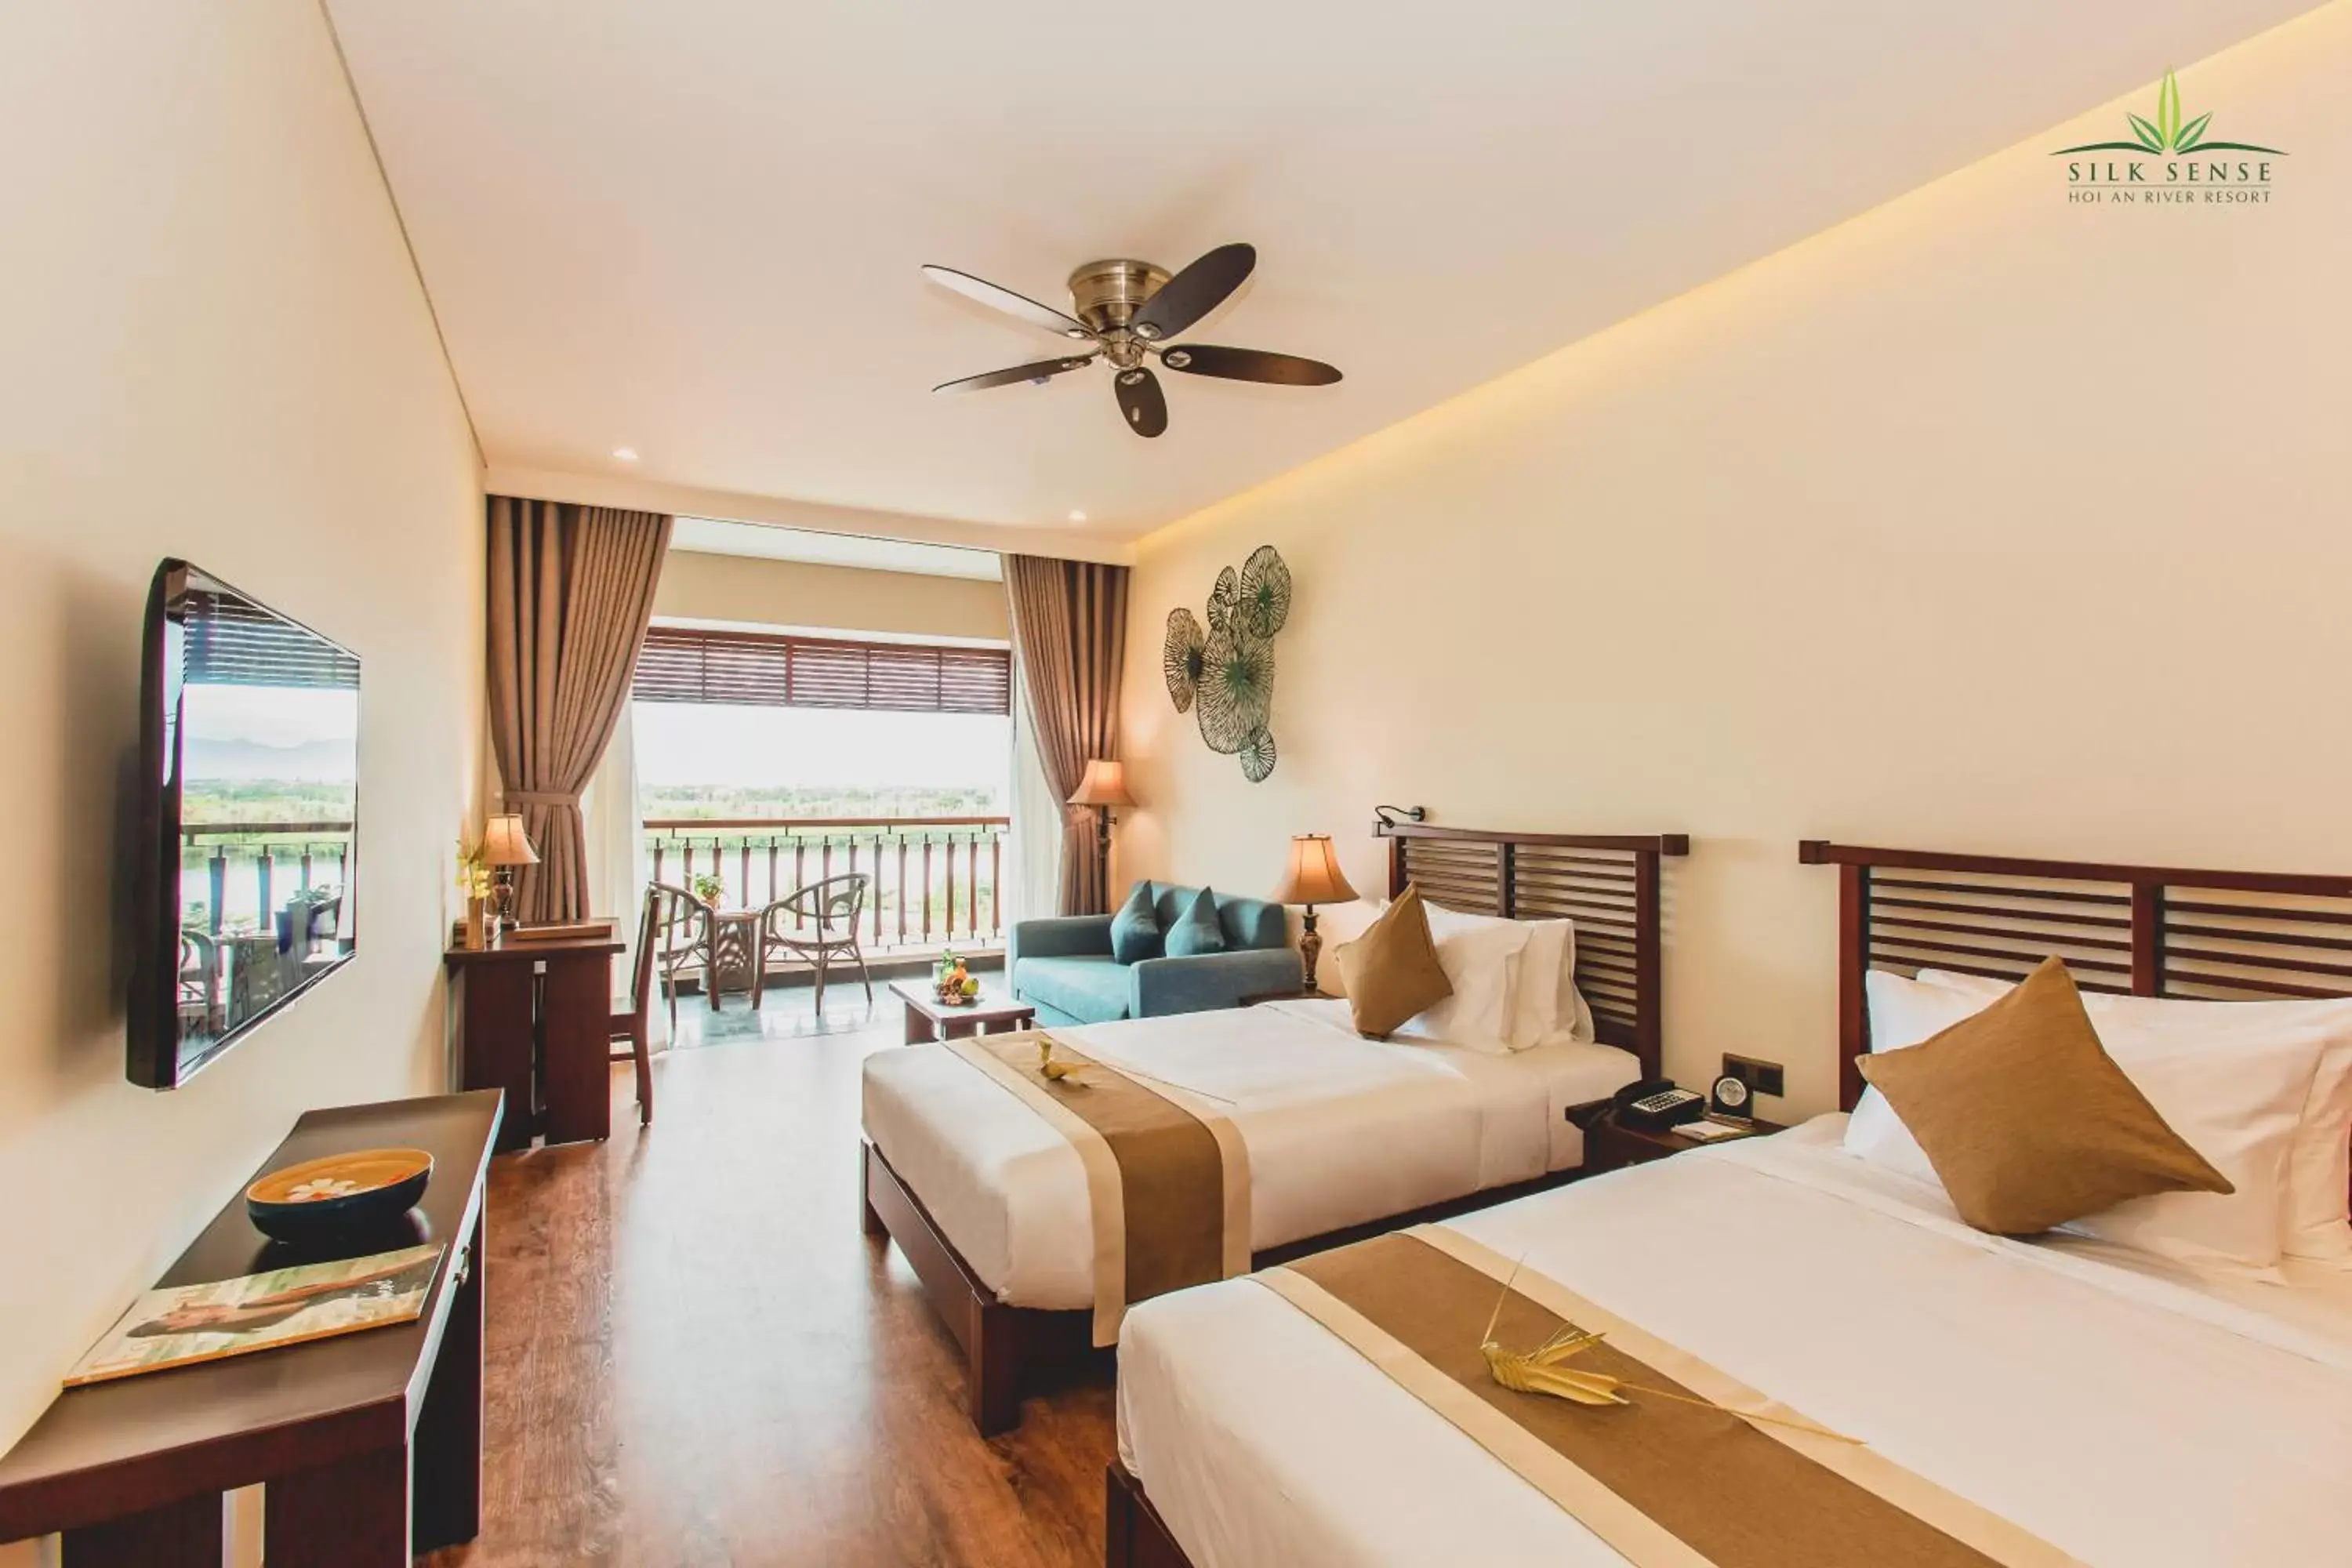 Bedroom in Silk Sense Hoi An River Resort